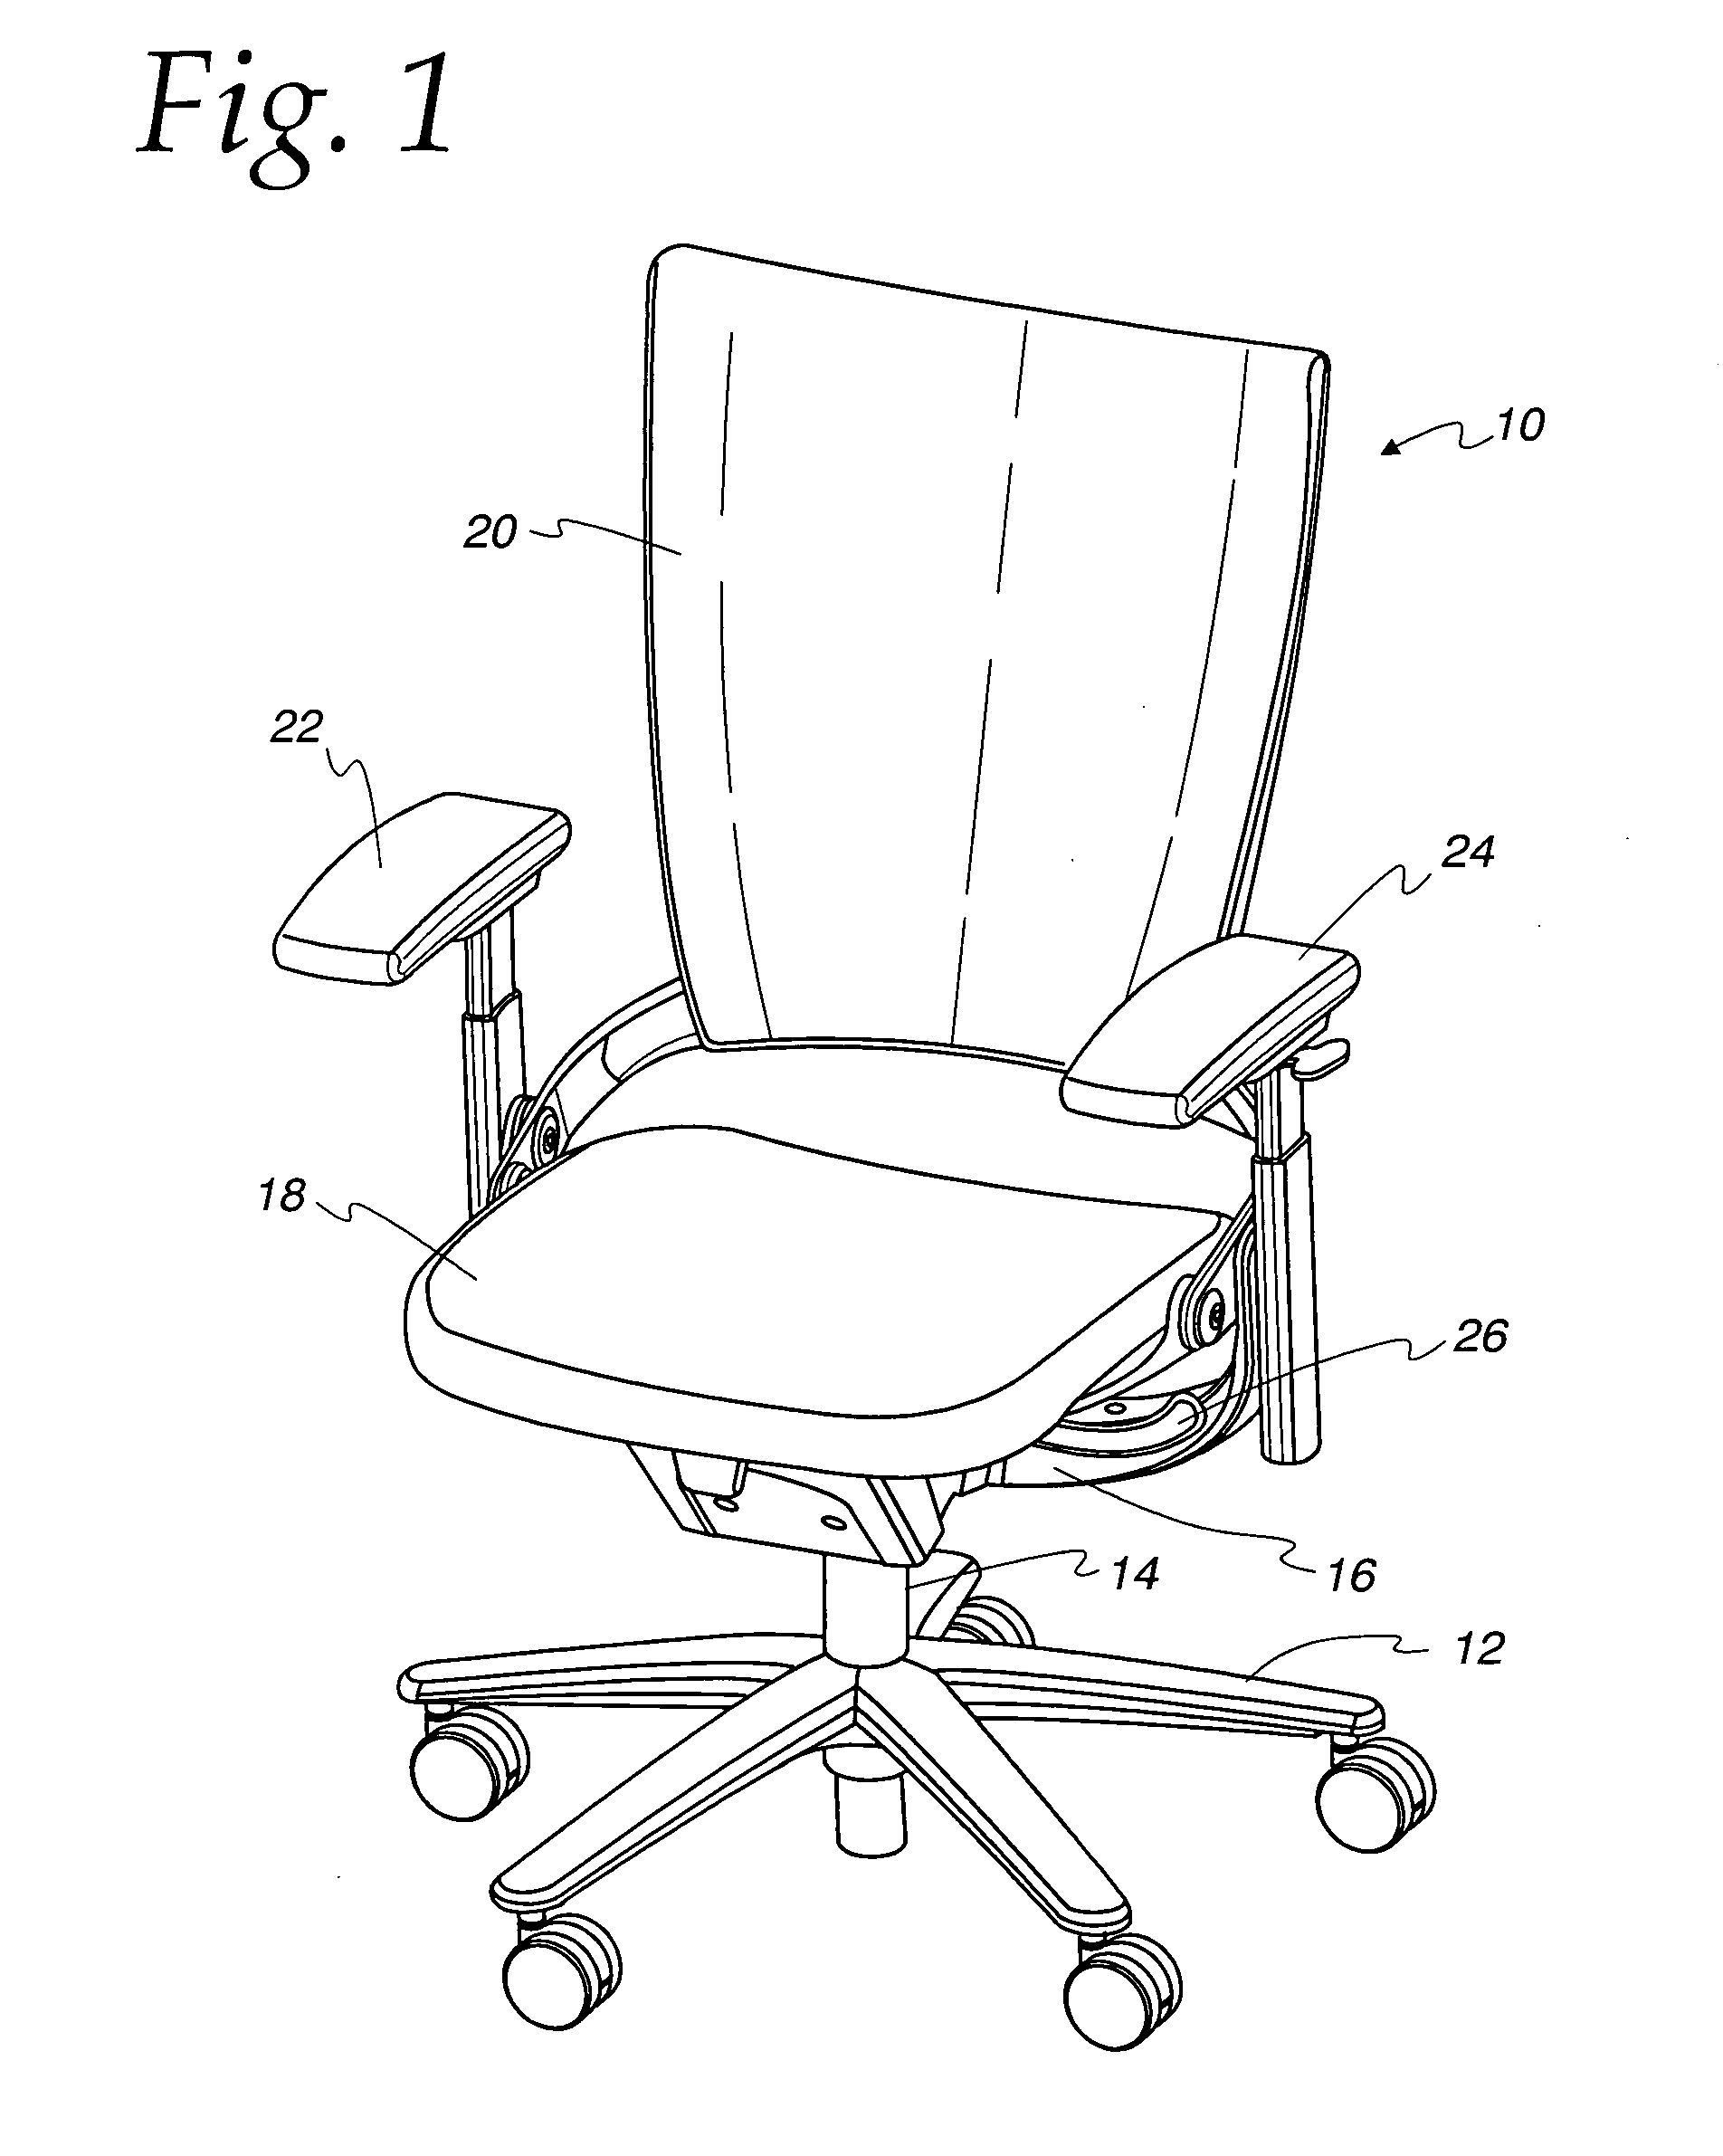 Vertically adjustable chair armrest